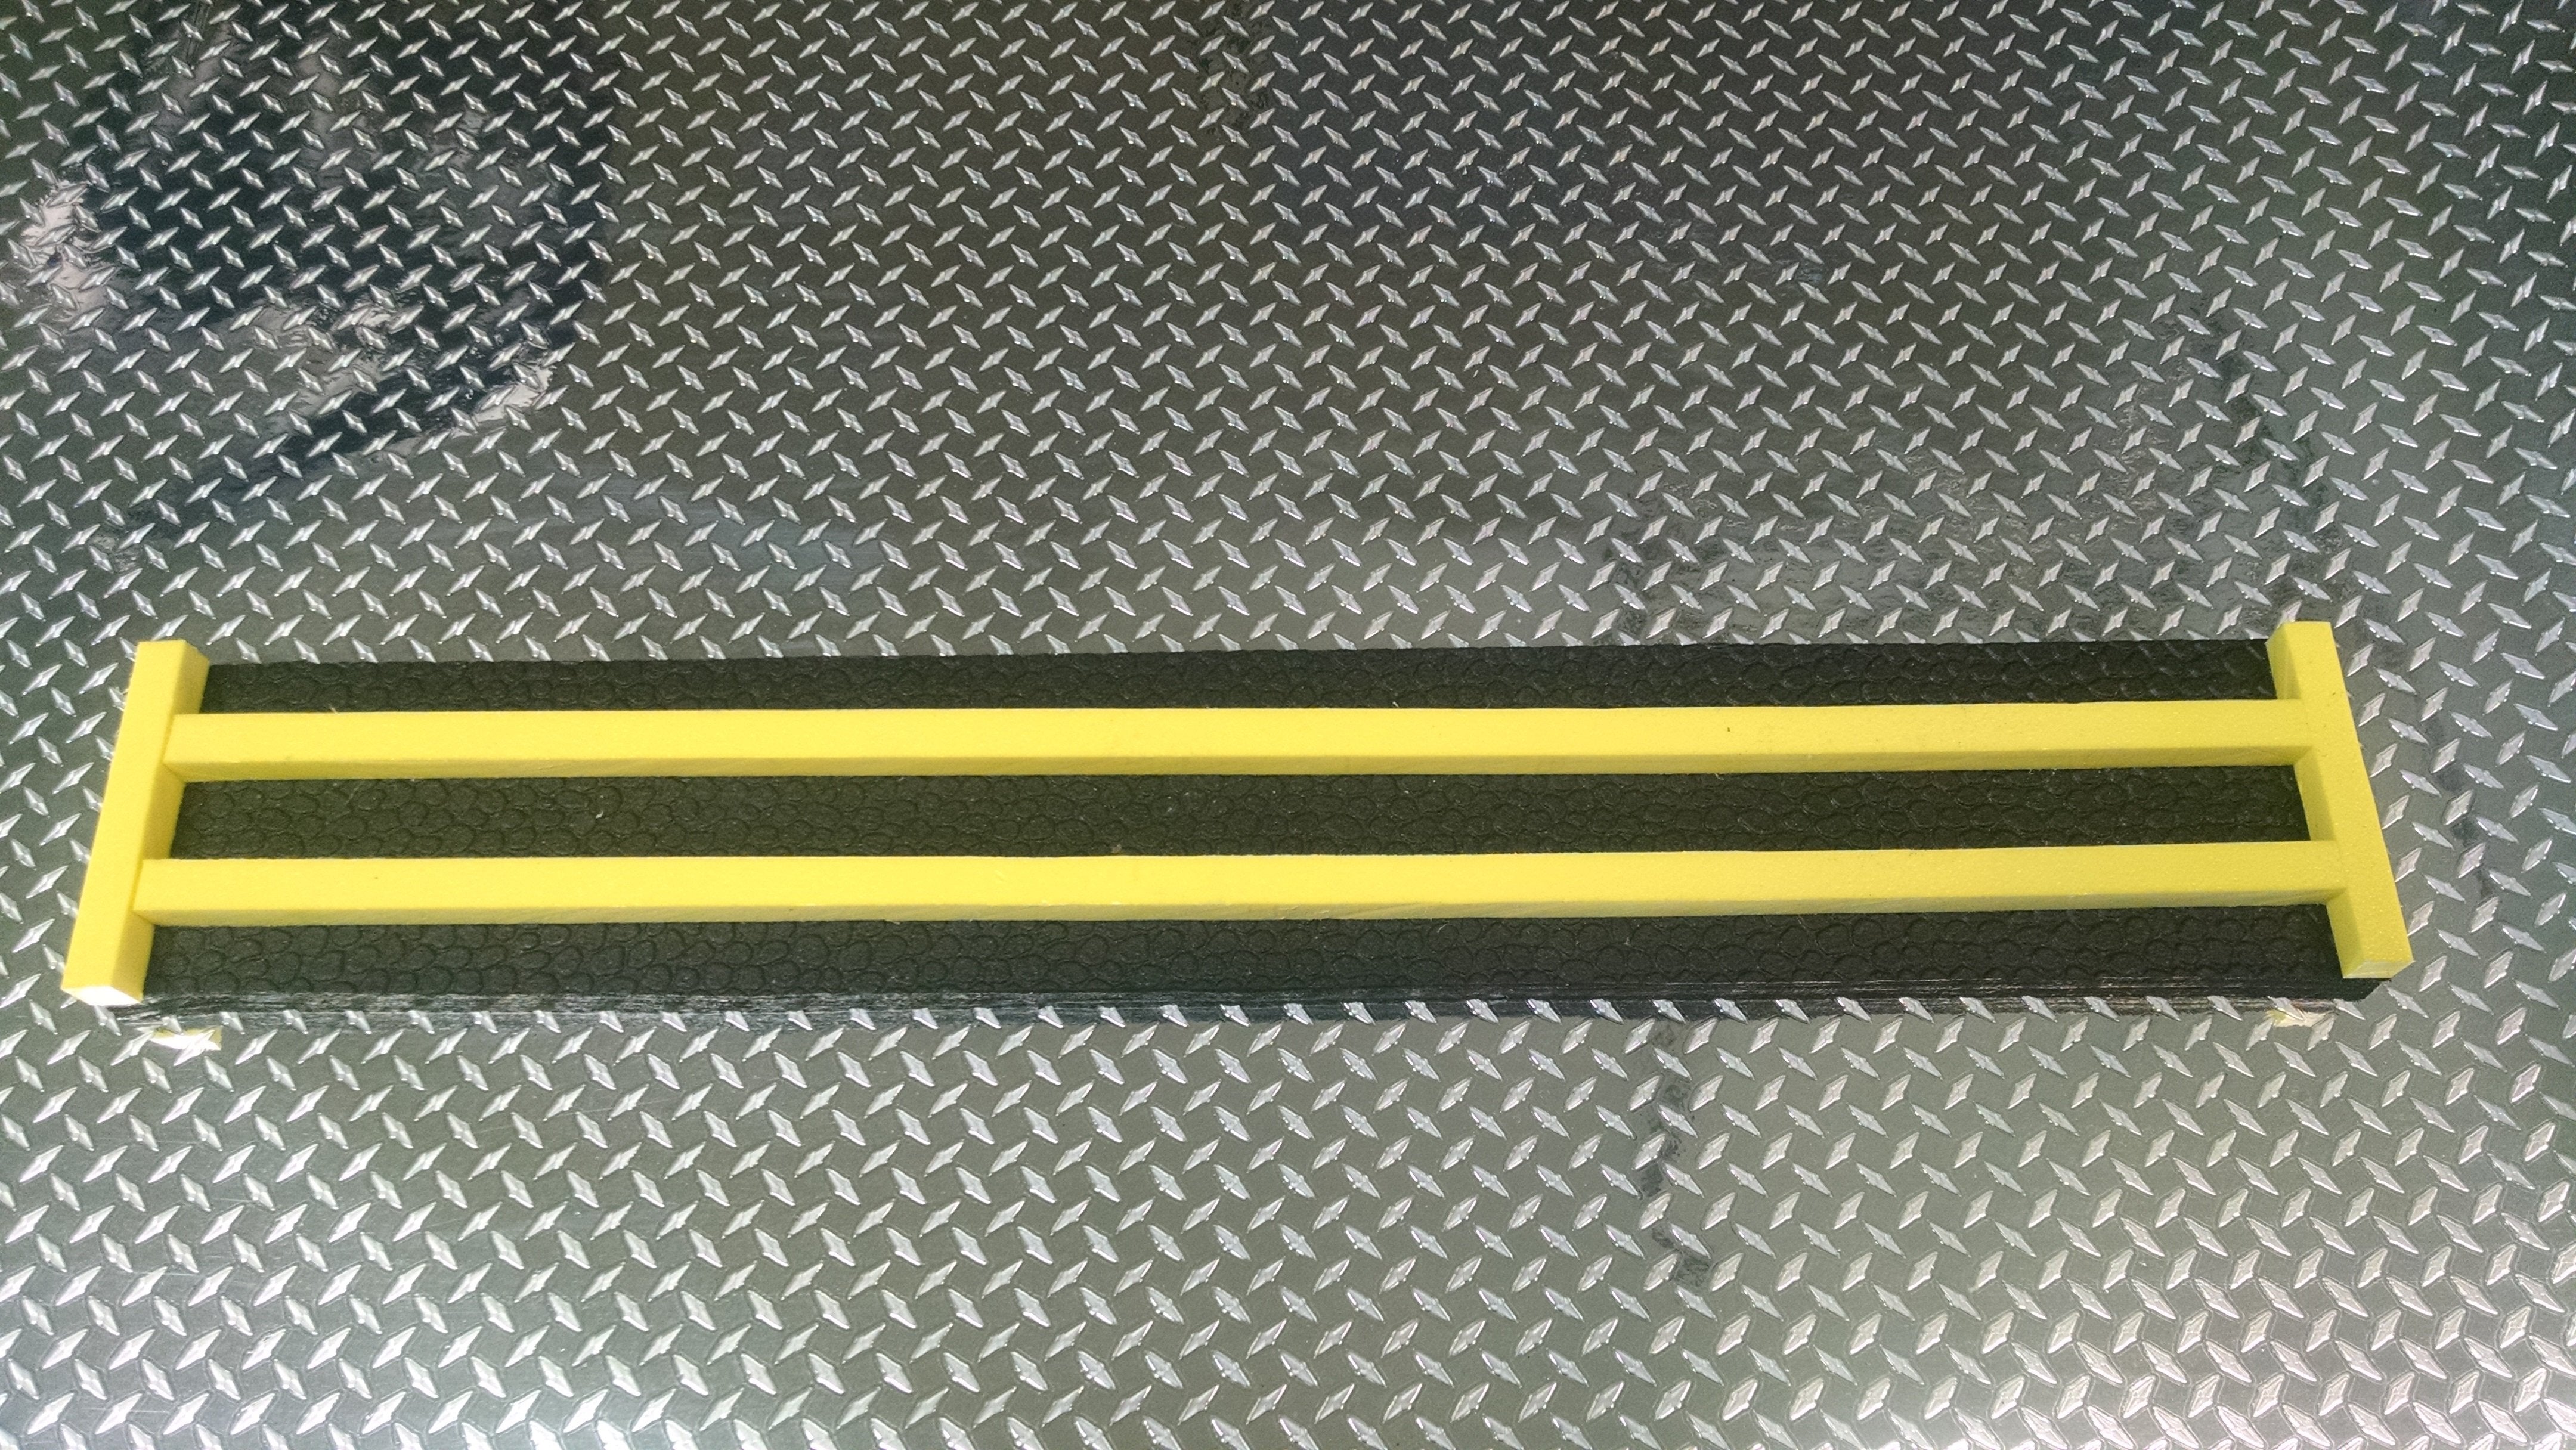 Yellow Rack Bar Pad Trailer Deck Protector